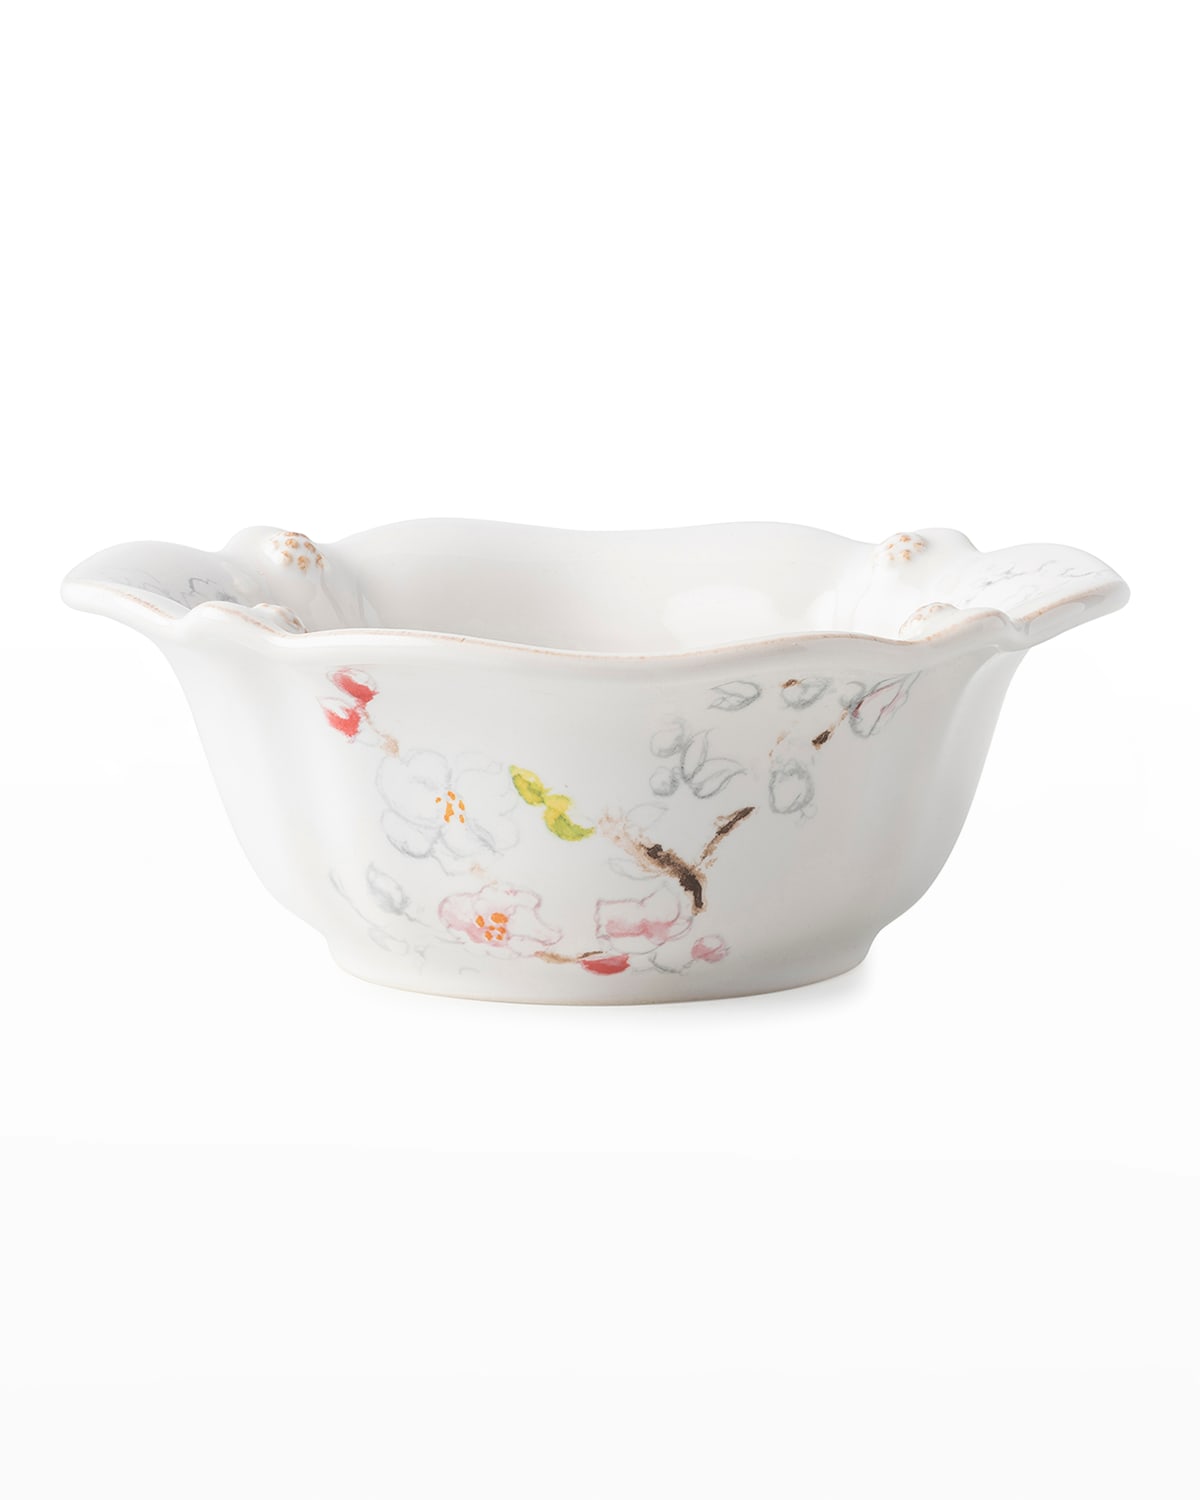 Shop Juliska Berry & Thread Floral Sketch Cereal Bowl - Cherry Blossom